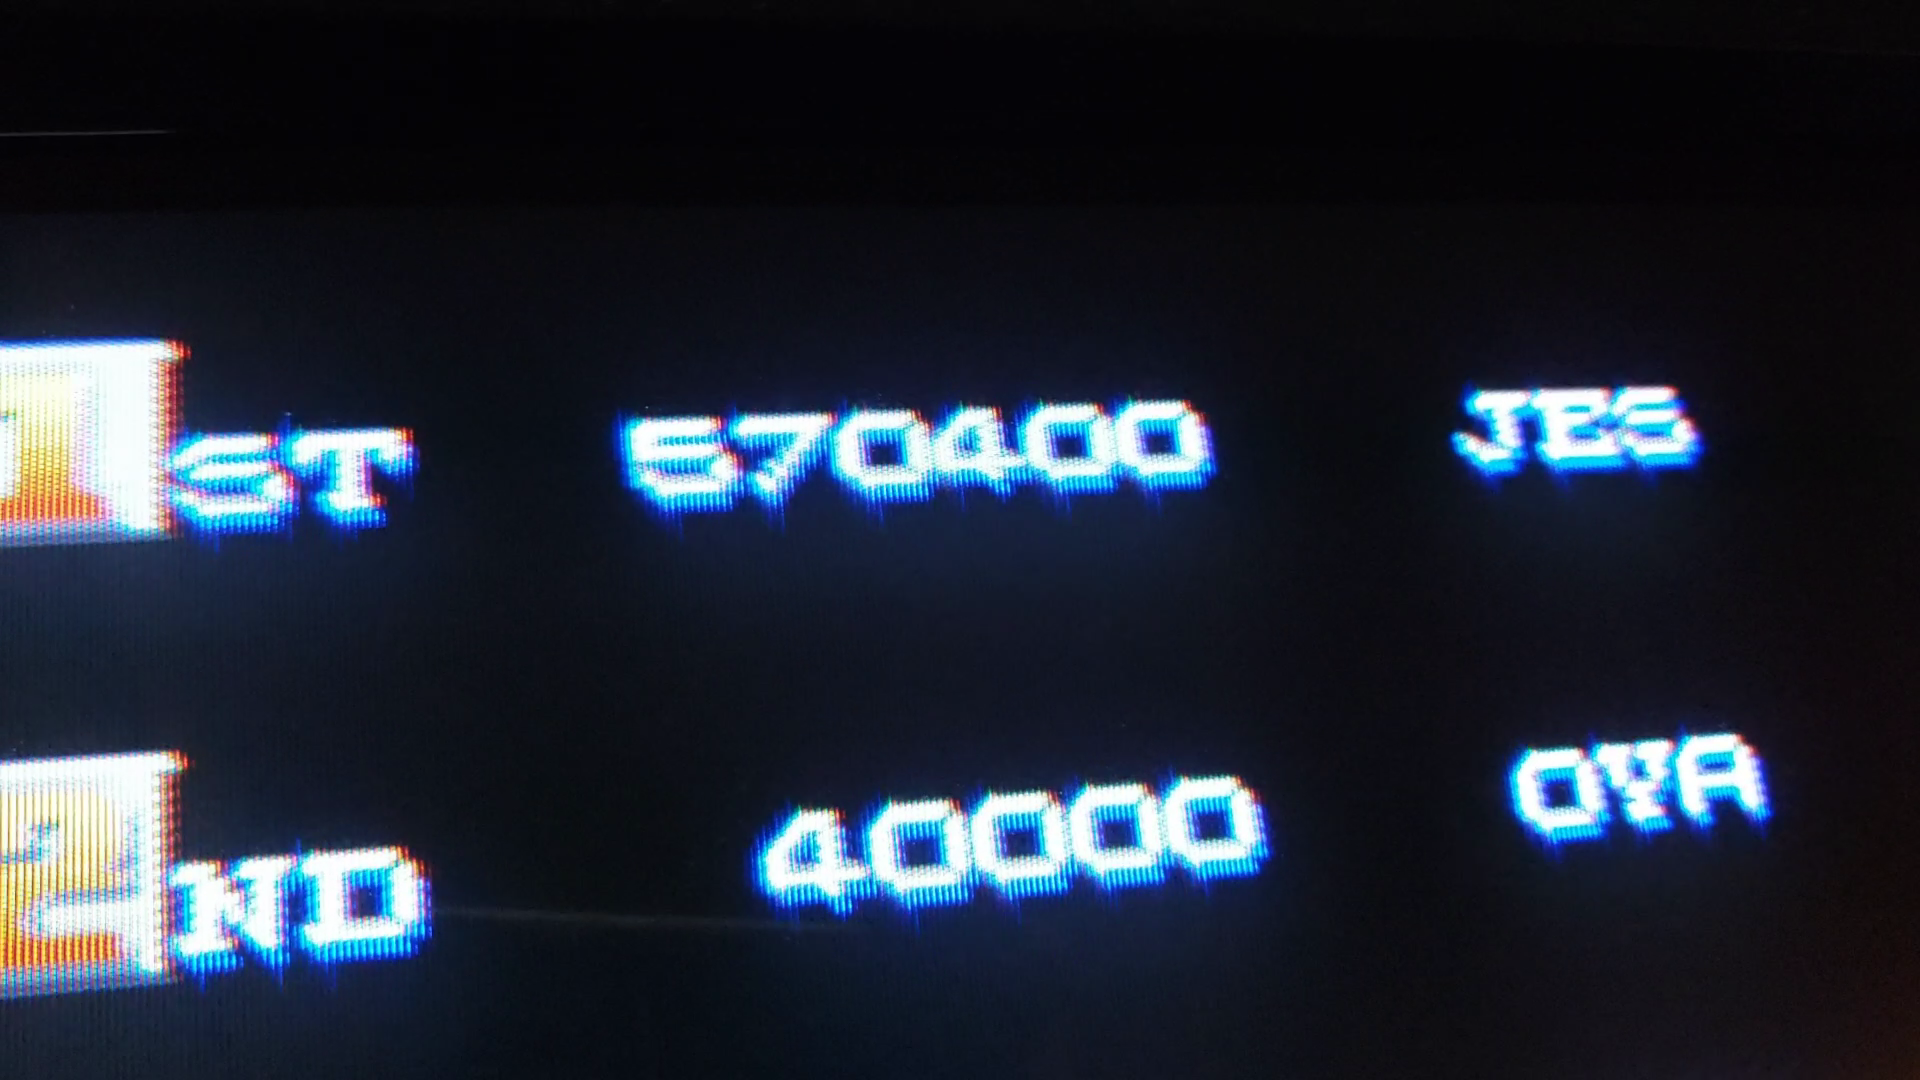 Final Star Force [fstarfrc] 570,400 points